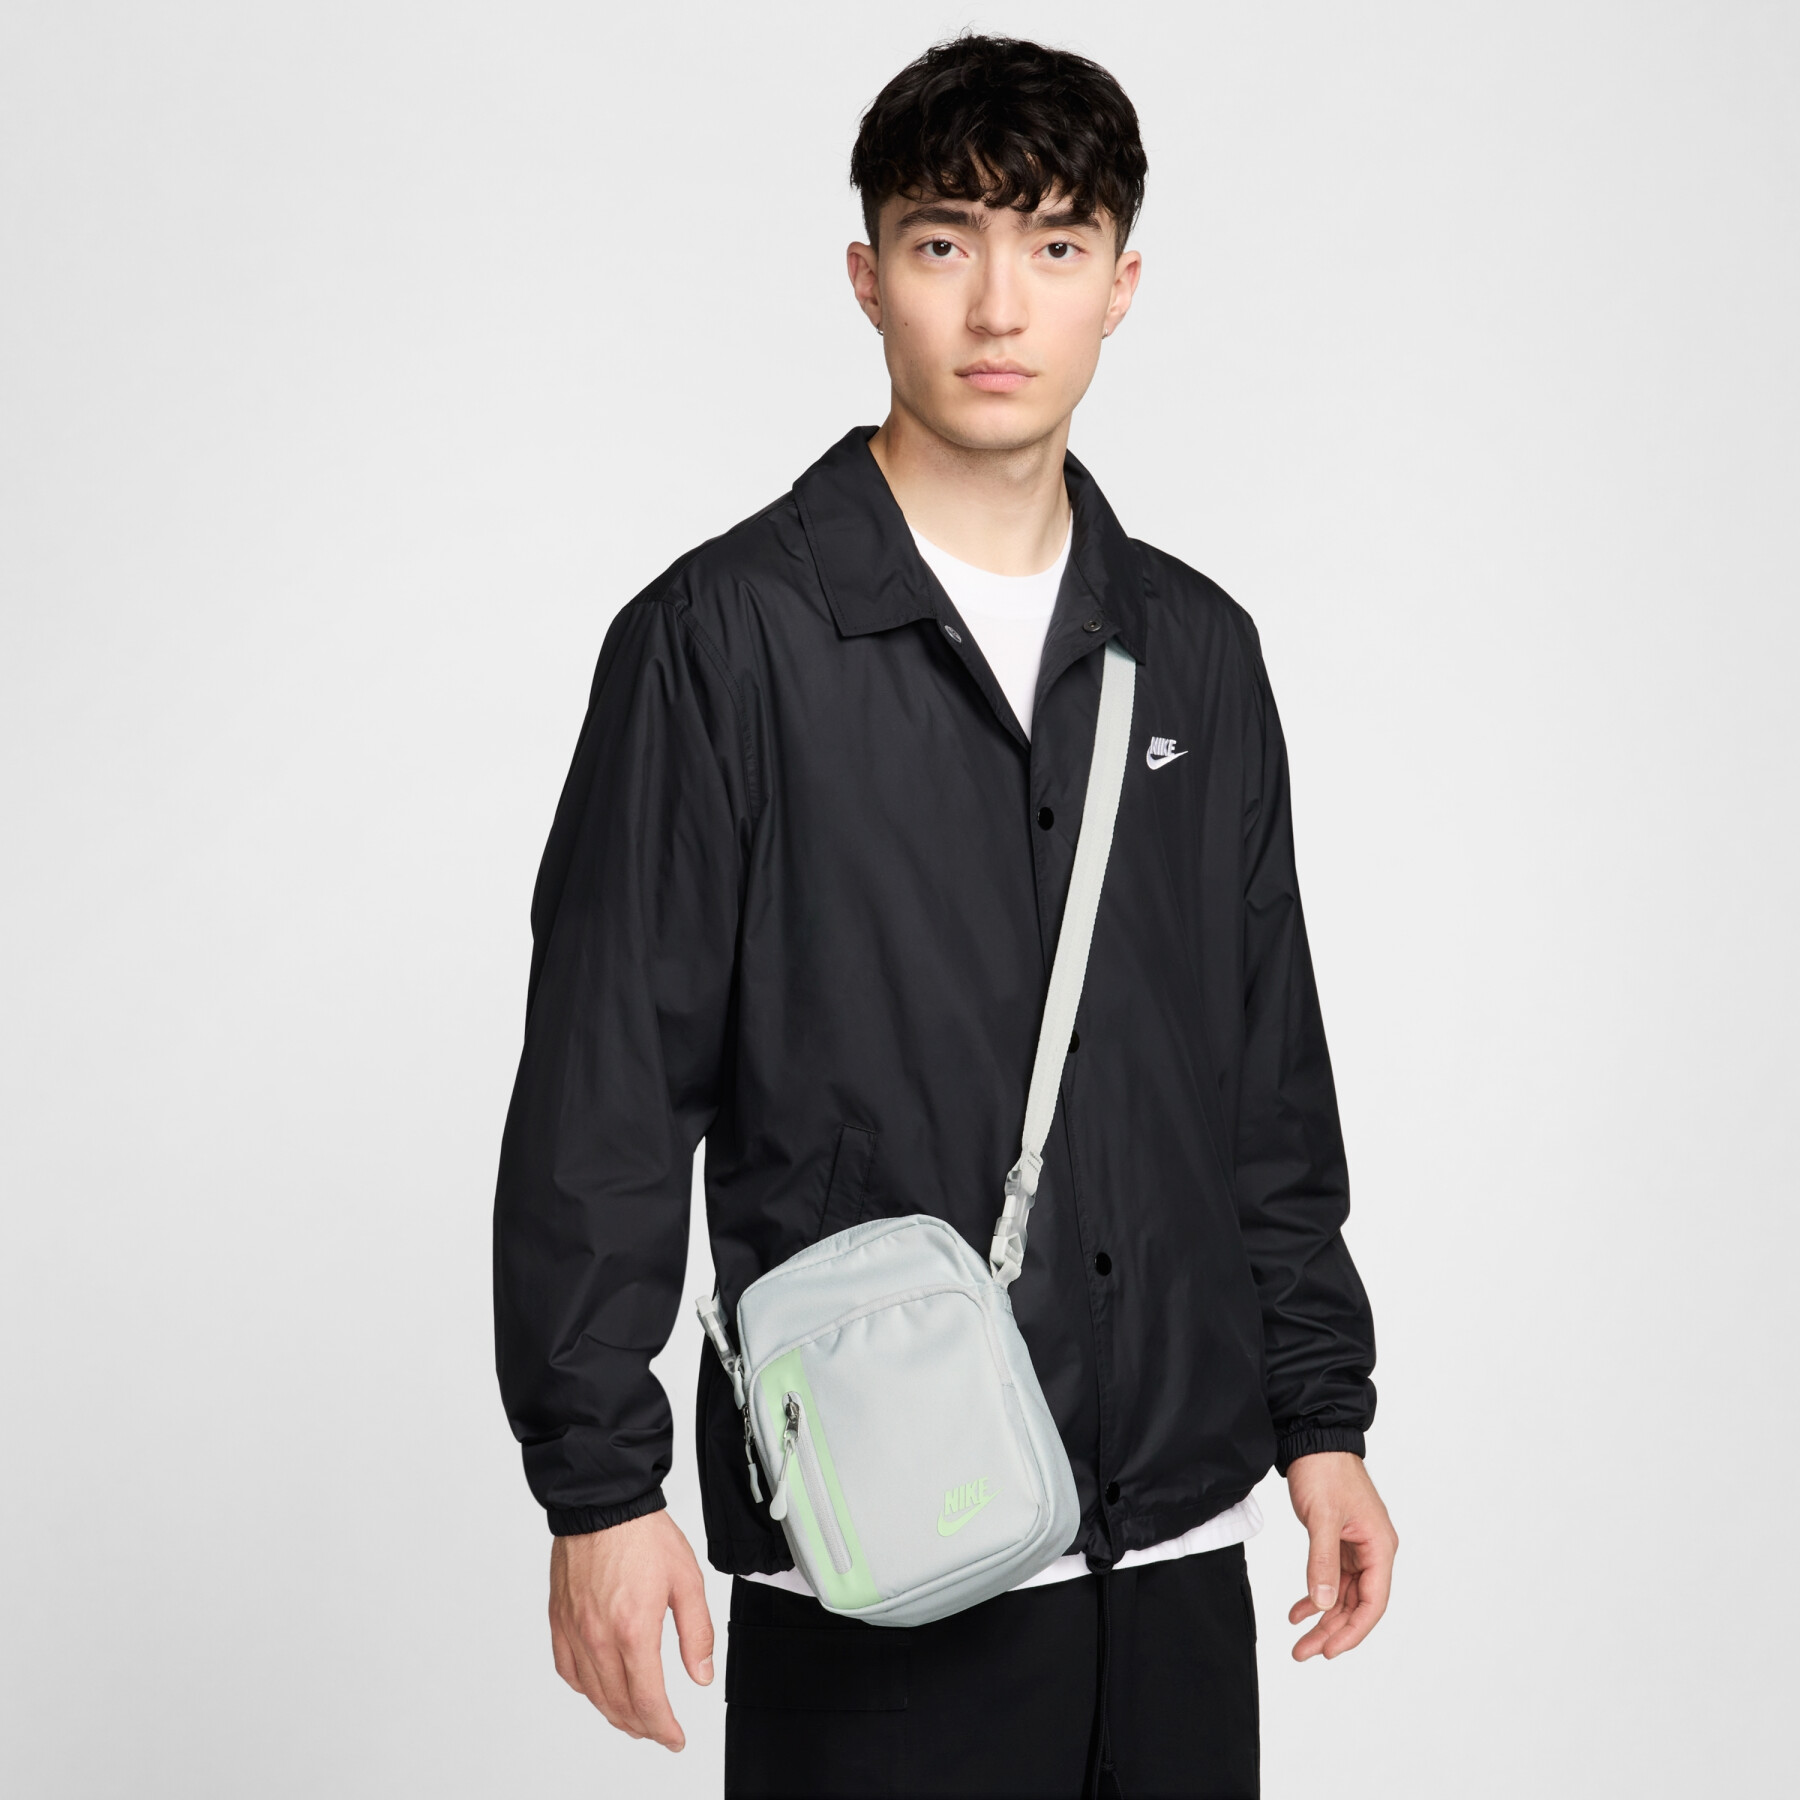 Shoulder Bag Nike Elemental Premium